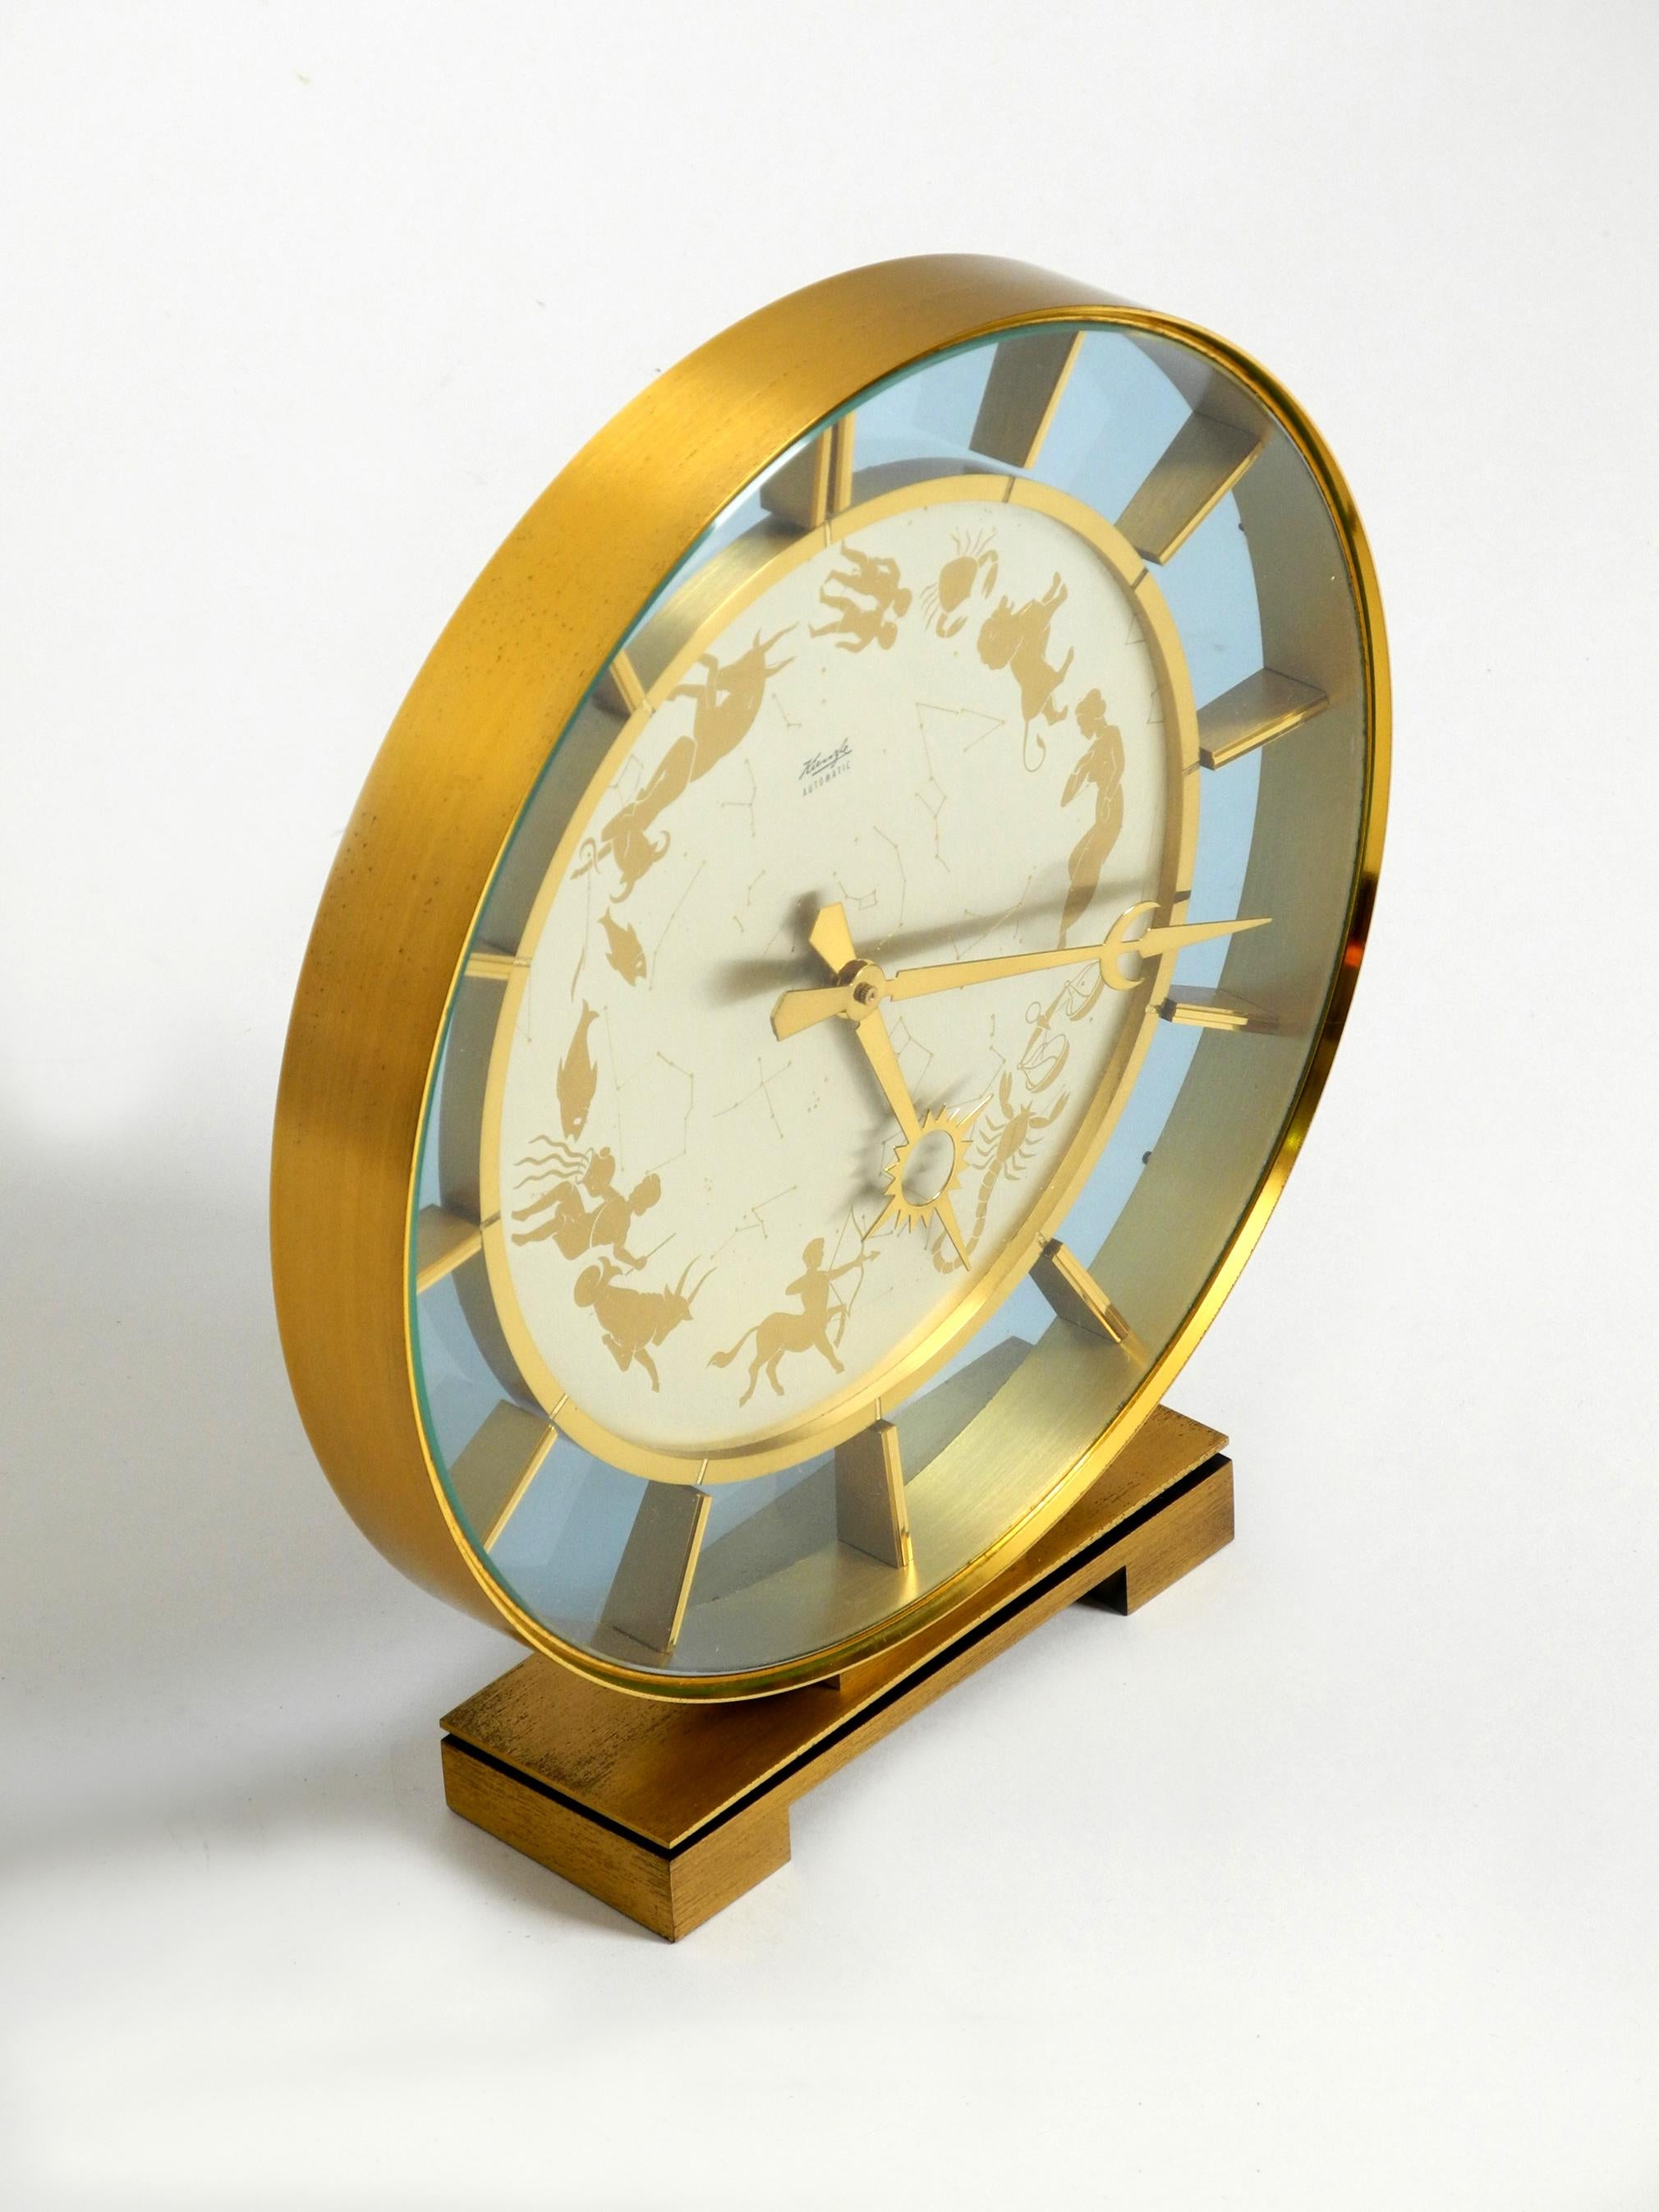 Rare Beautiful 1970s Big Kienzle Zodiac Table Clock Made of Heavy Brass 5